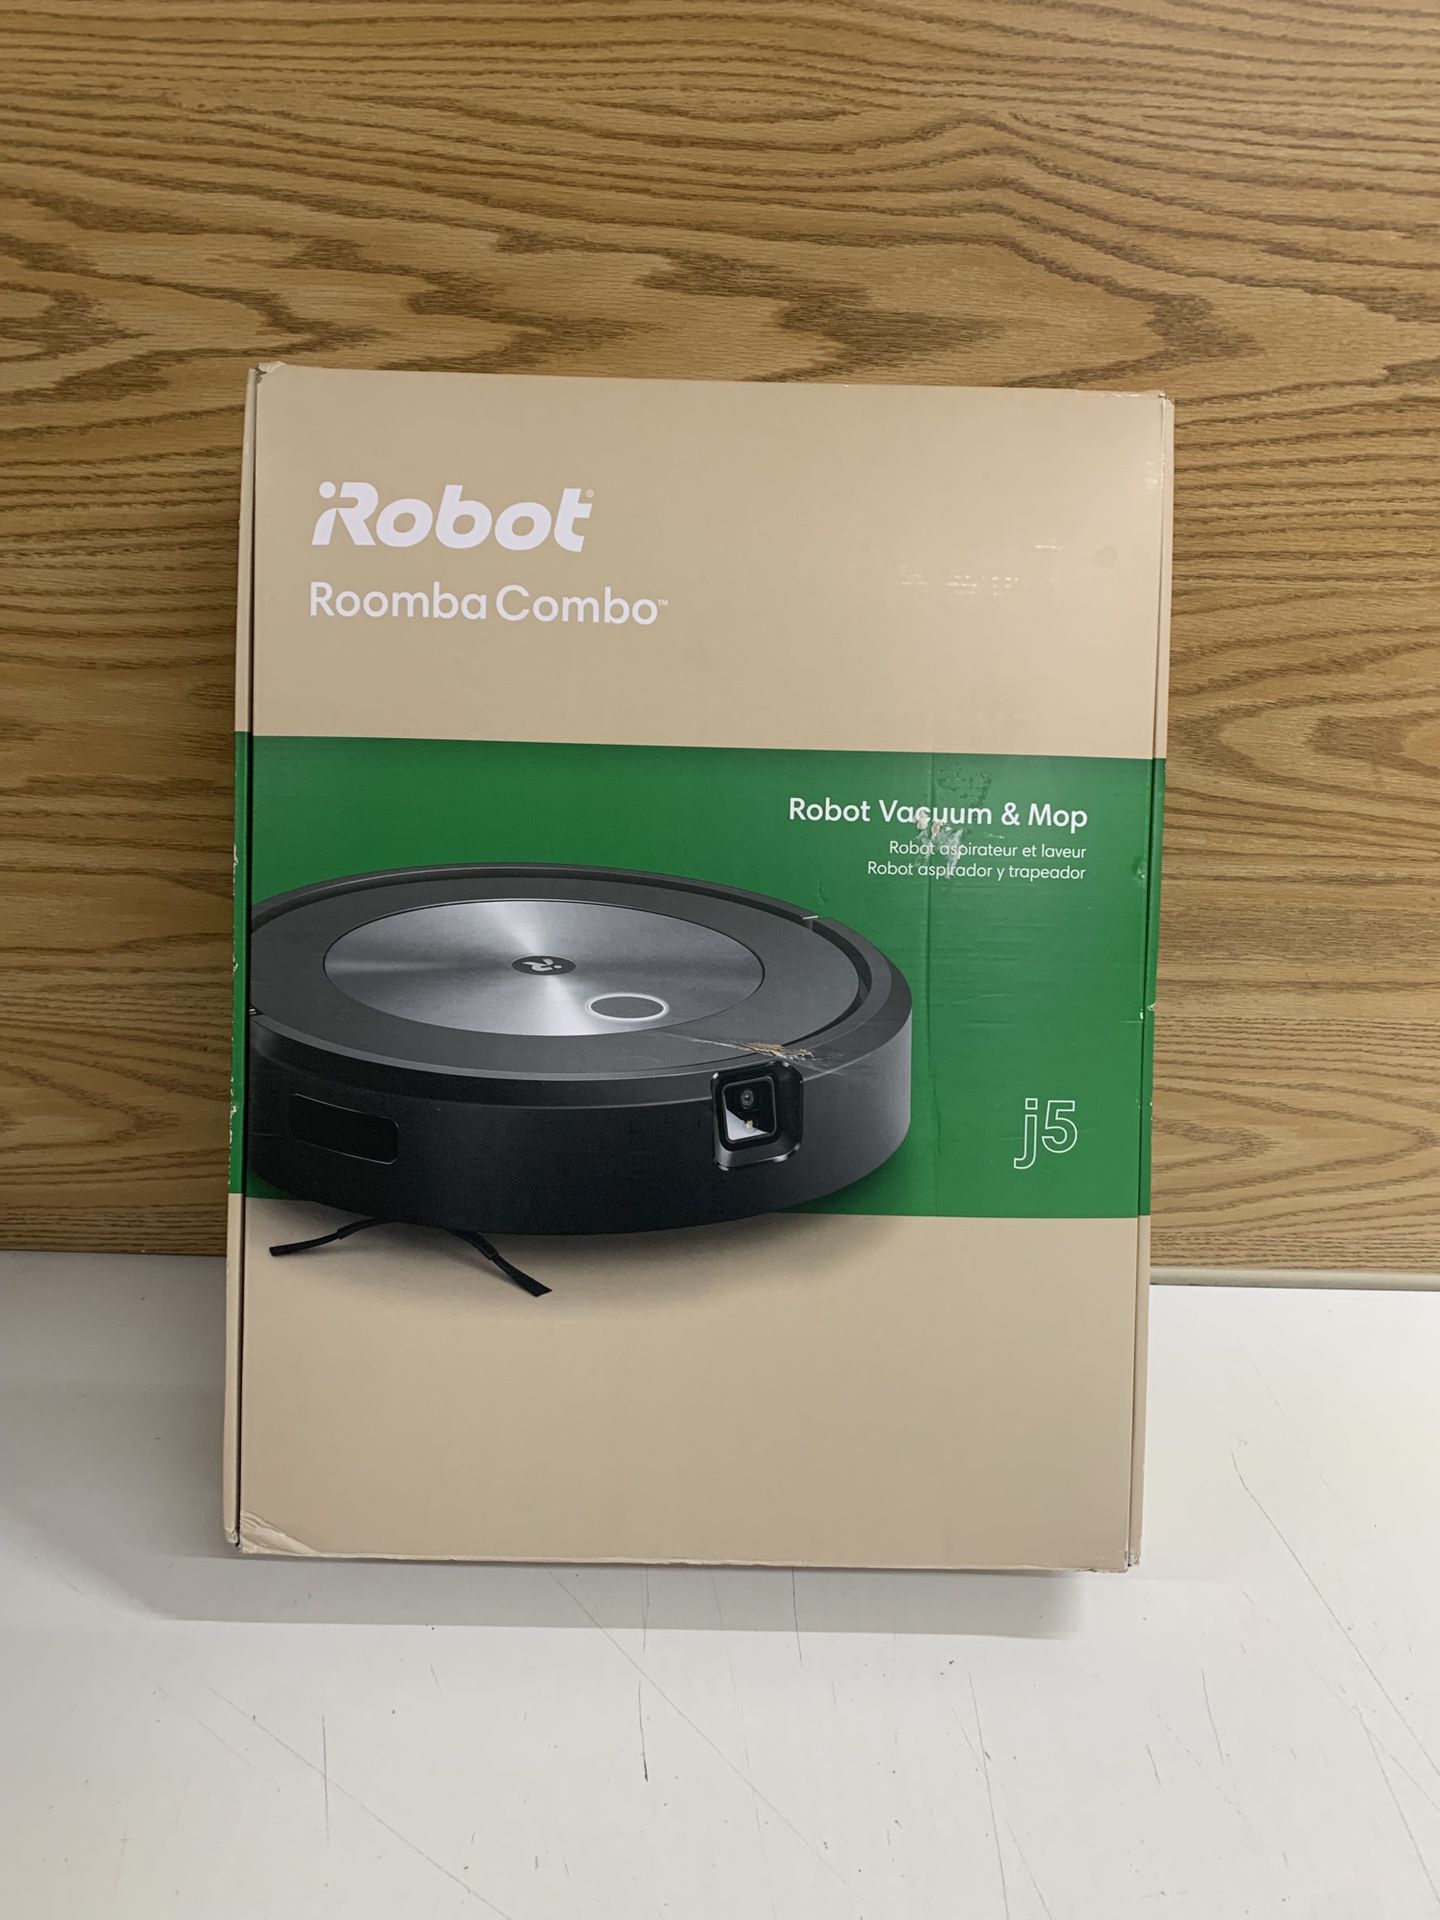 IRobot Roomba Combo j5 Robot Vacuum and Mop